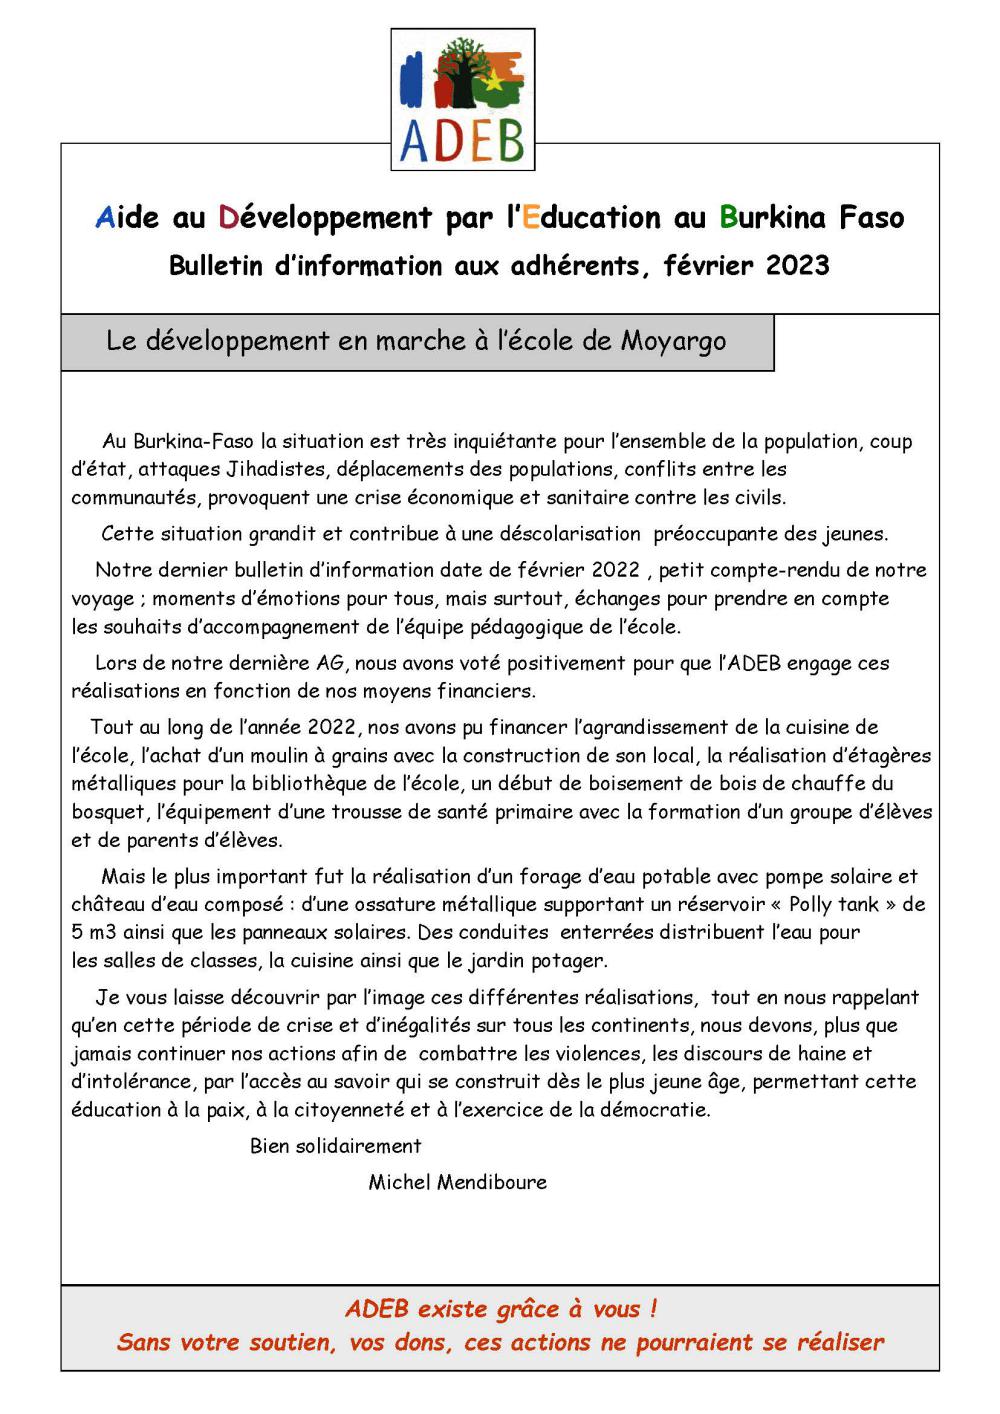 Bulletin ADEB n° 19 février 2023 - Page 1